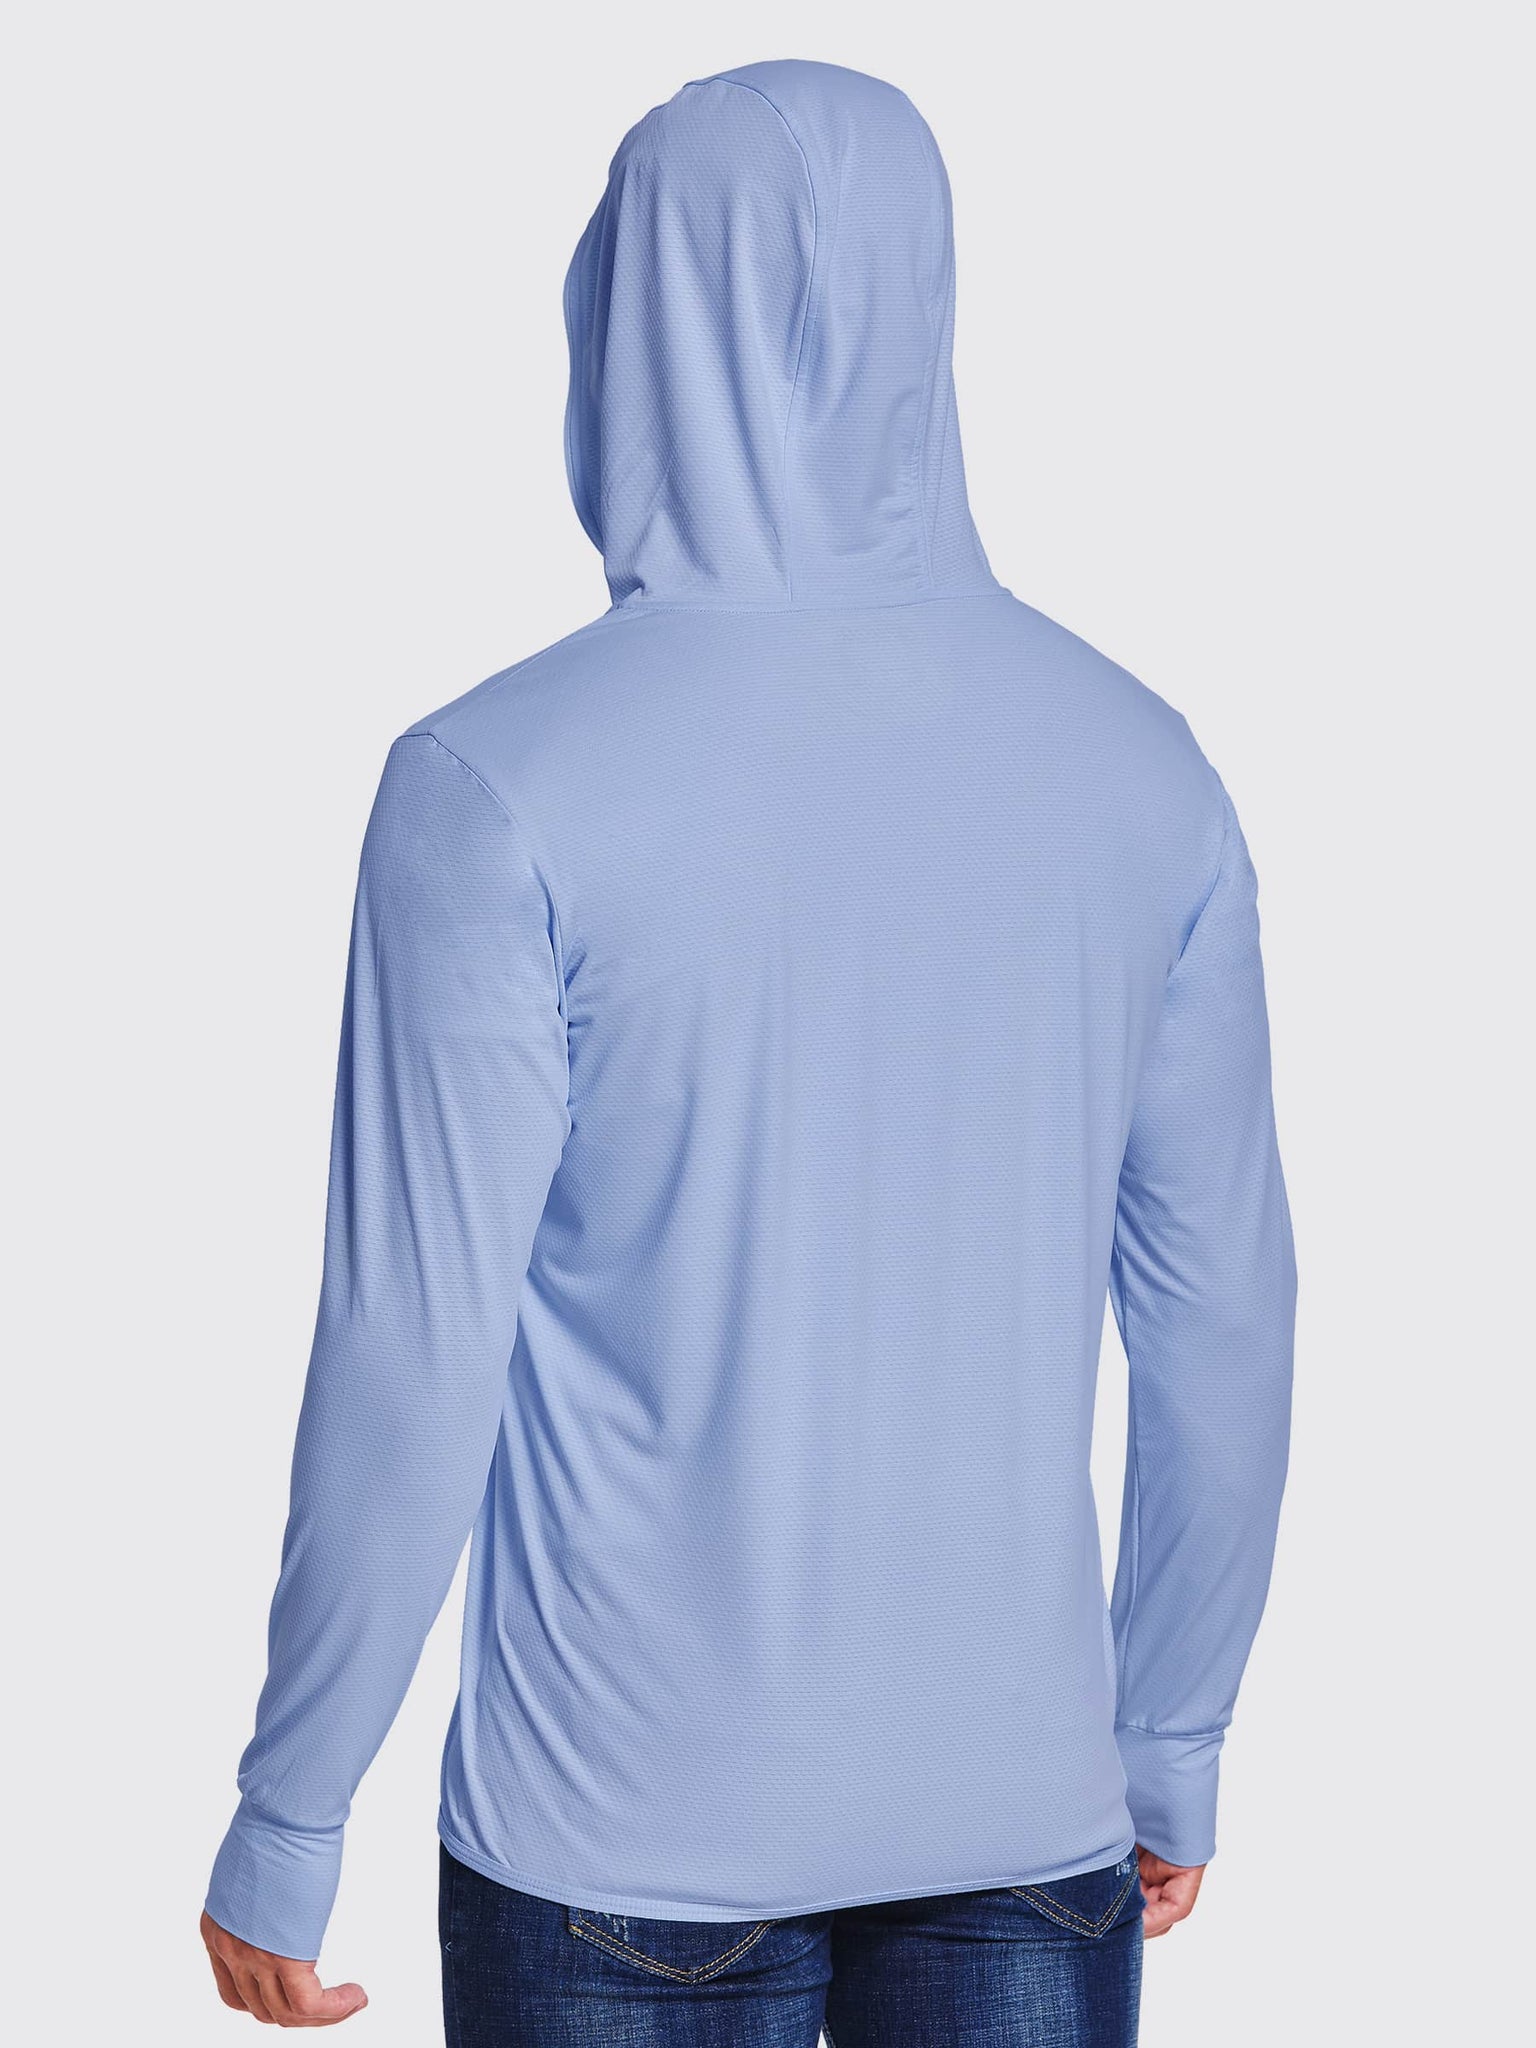 Willit Men's Sun Protection Jacket Full Zip_FogBlue_model3